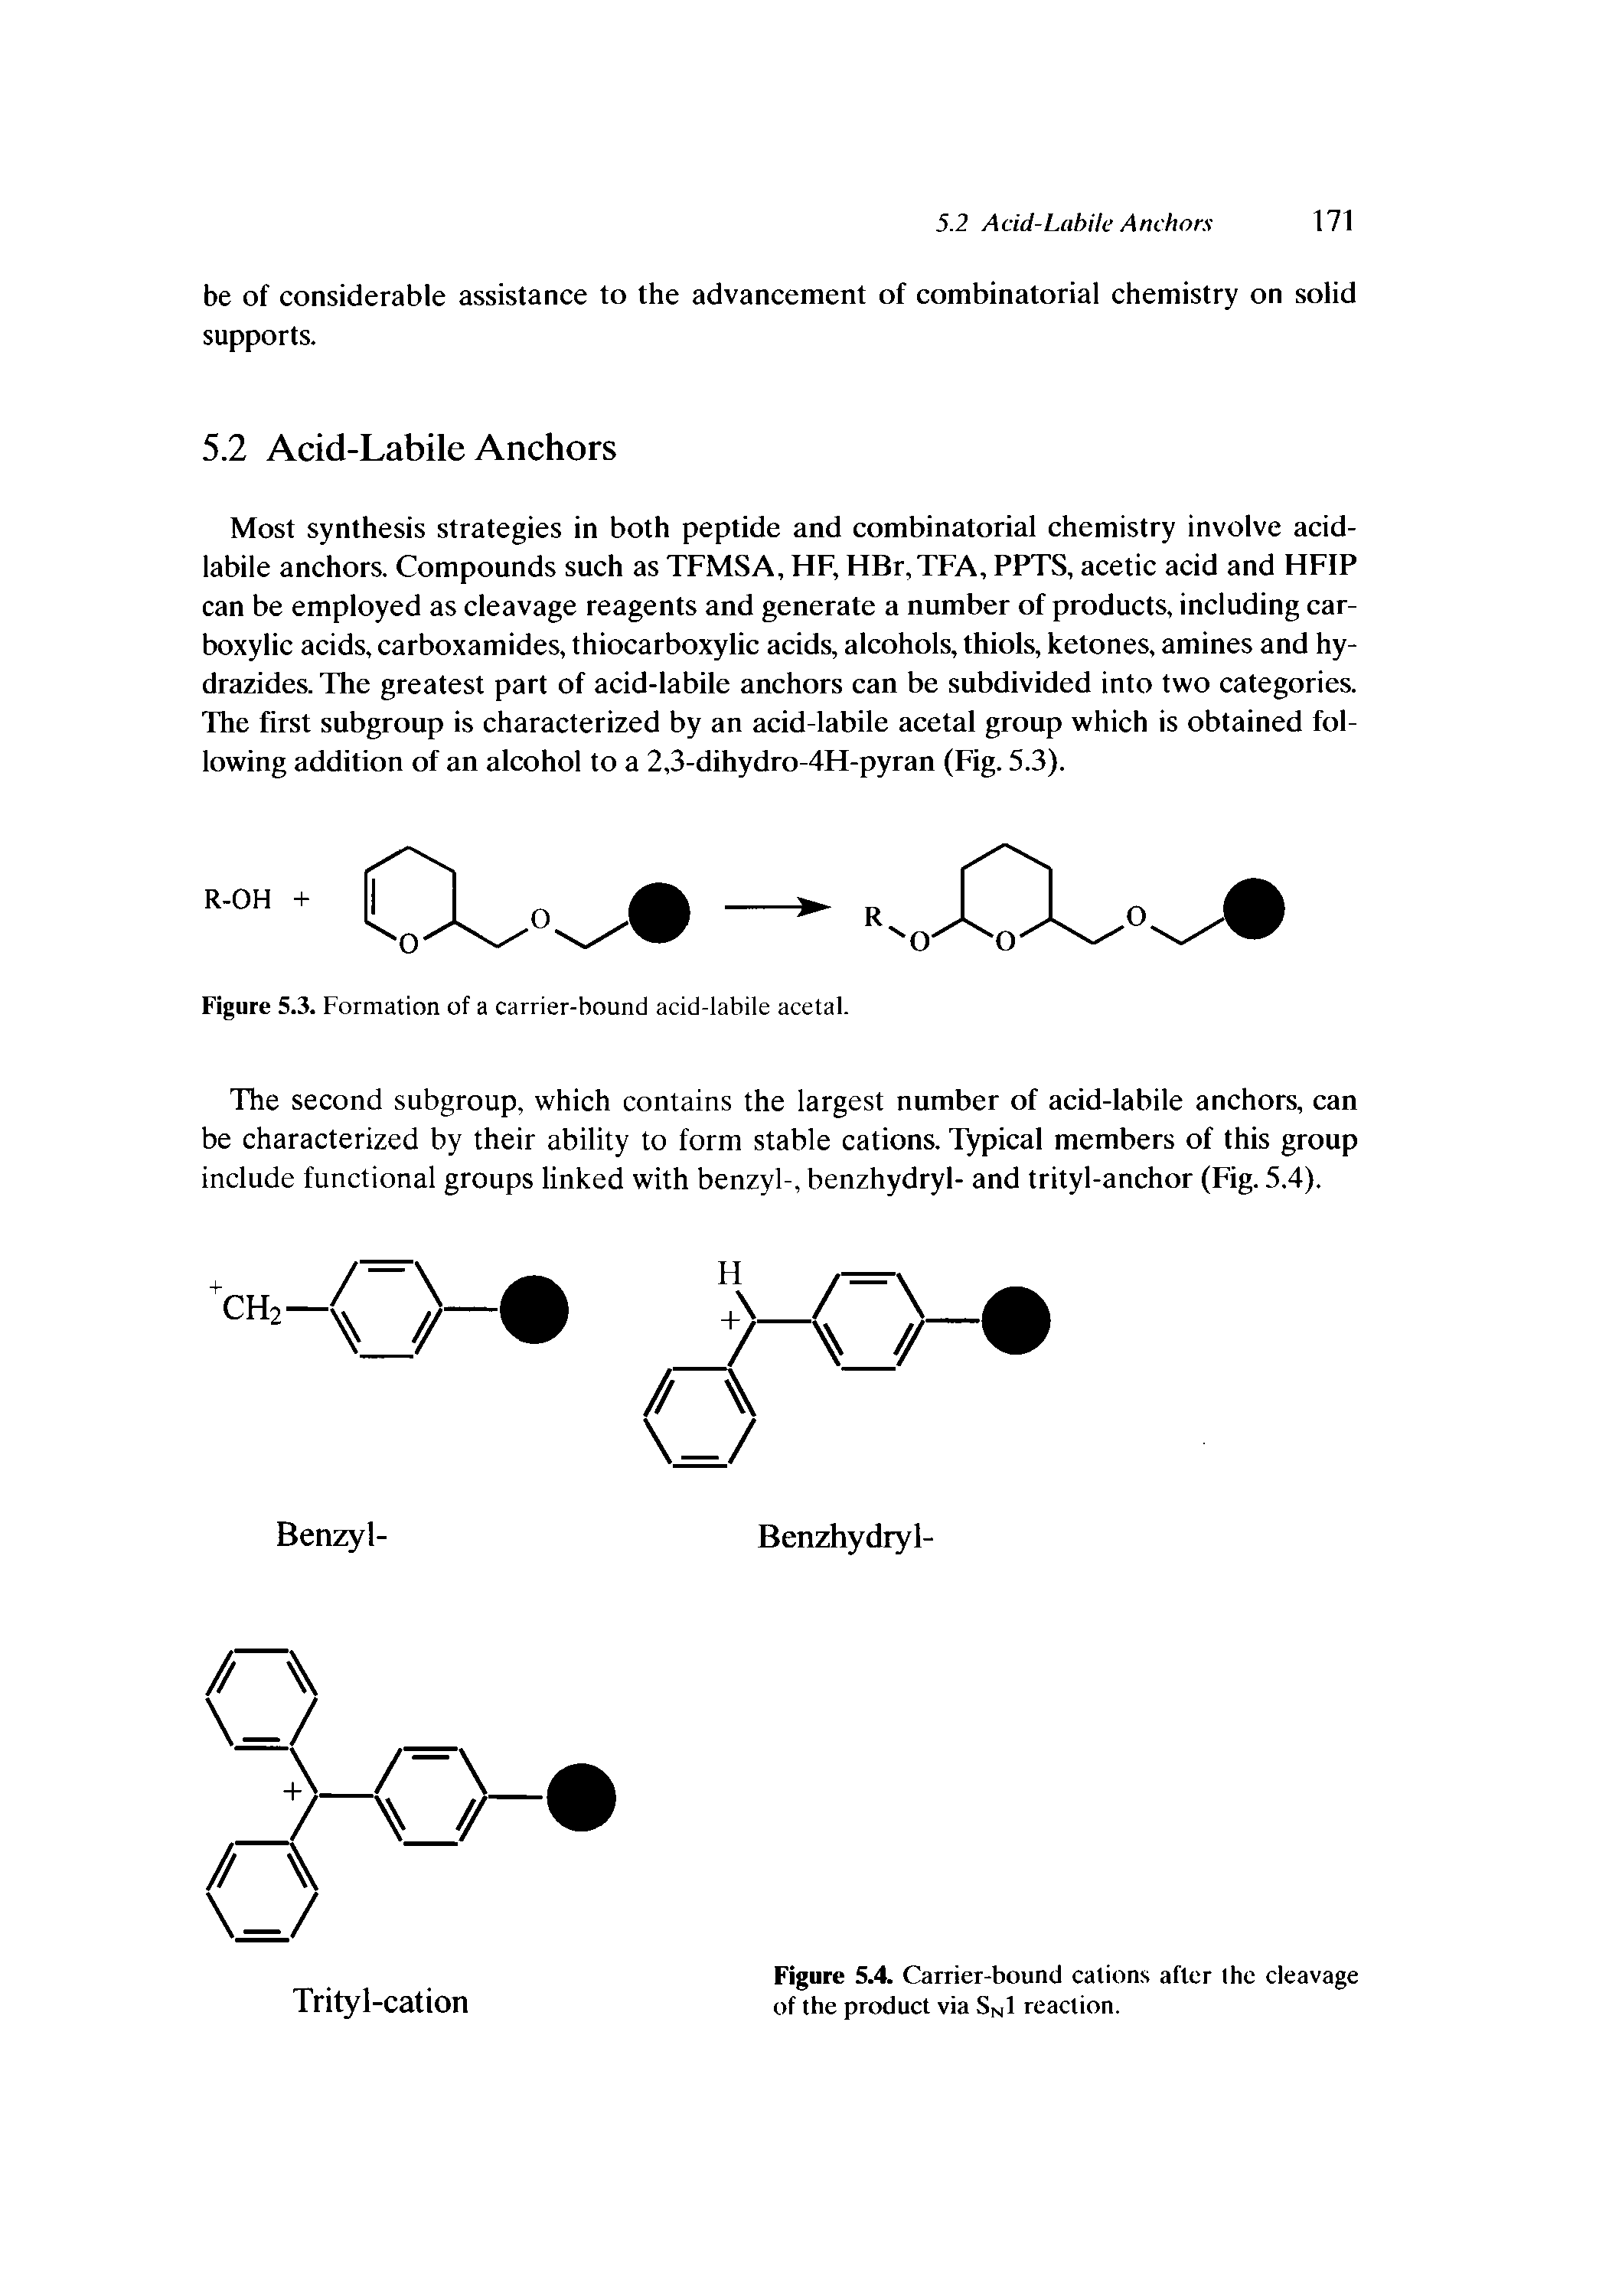 Figure 5.3. Formation of a carrier-bound acid-labile acetal.